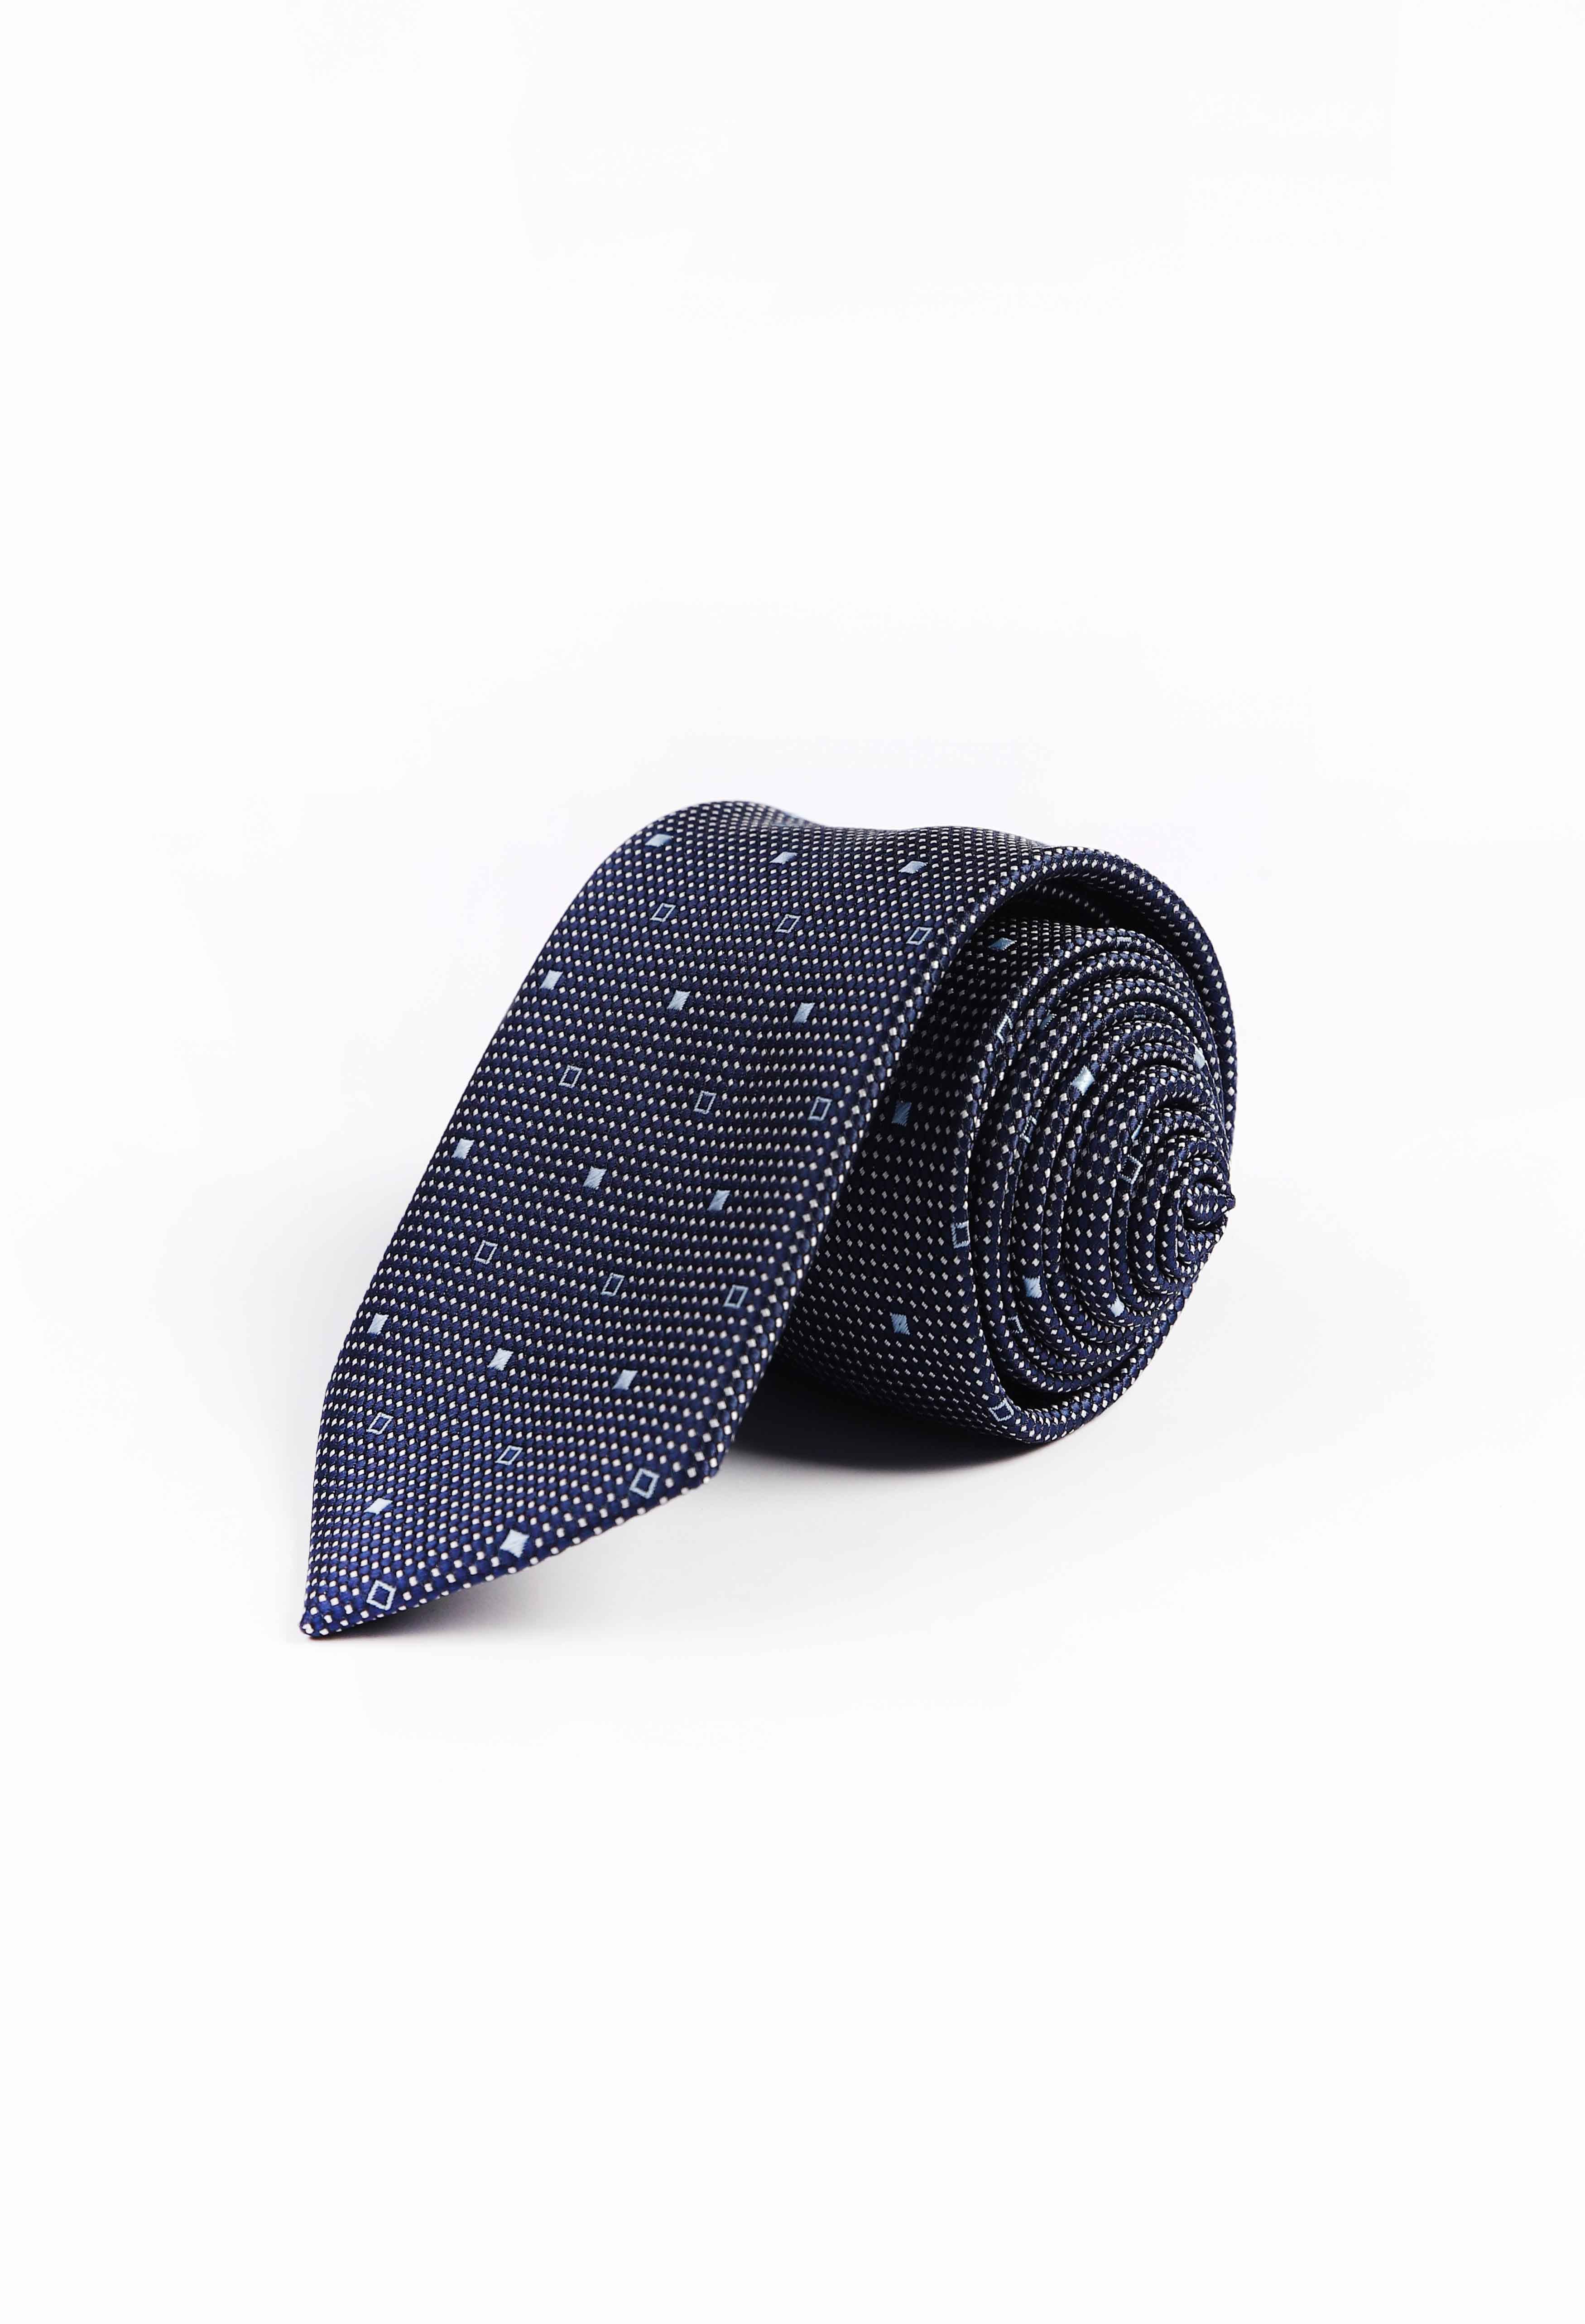 Lapis Lazuli Blue Doted Tie